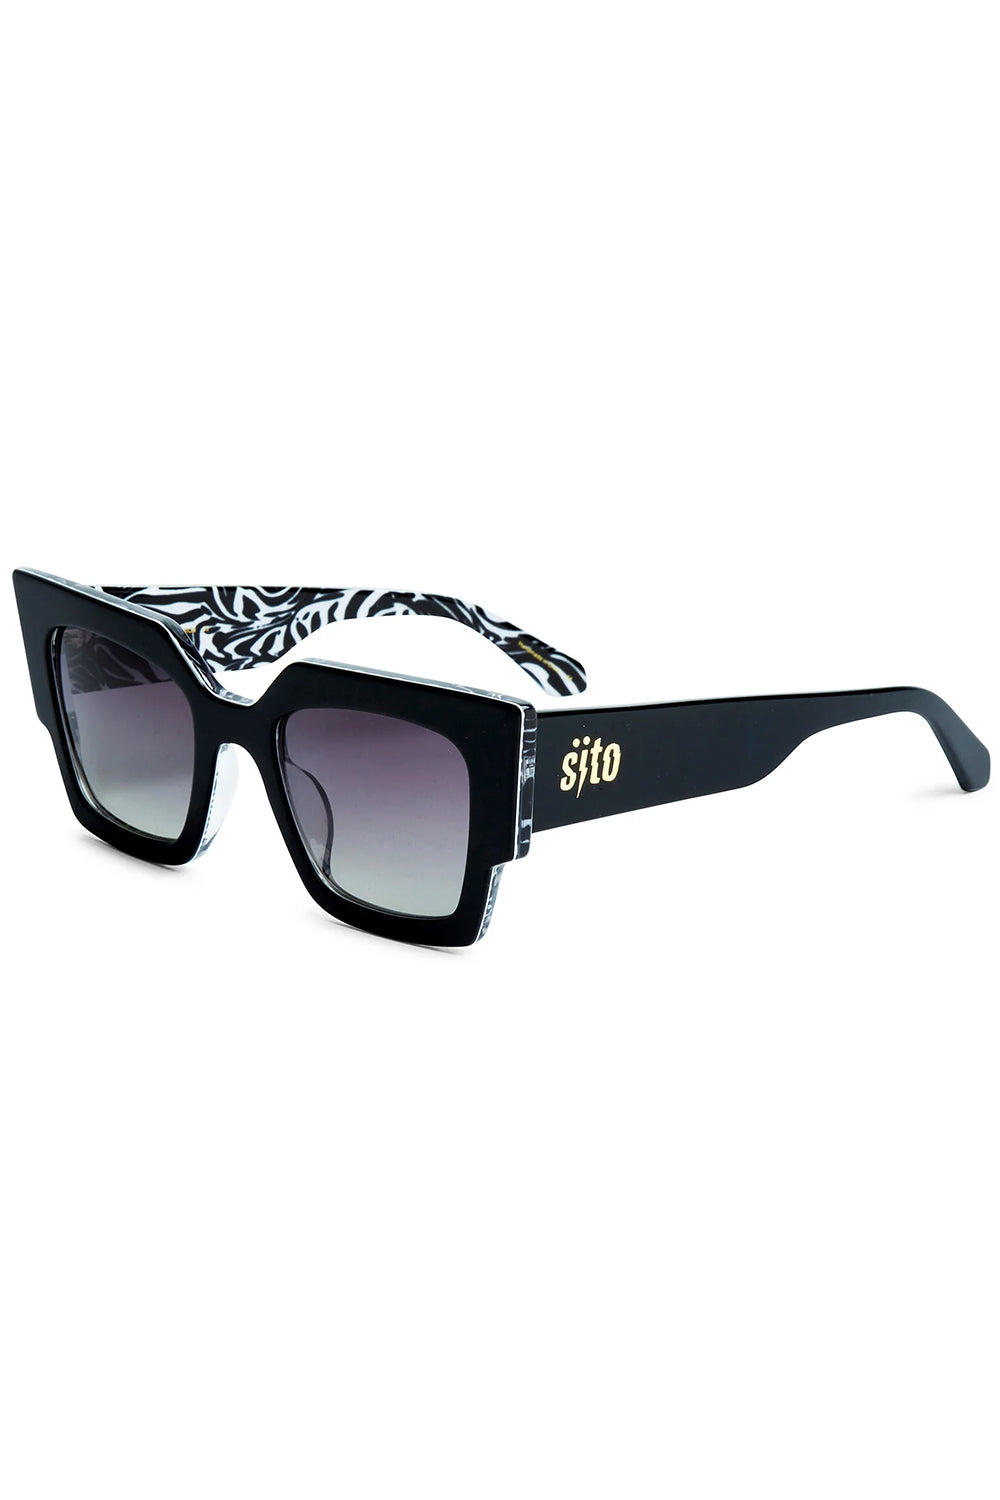 Sito Shades Sensory Division Sunglasses